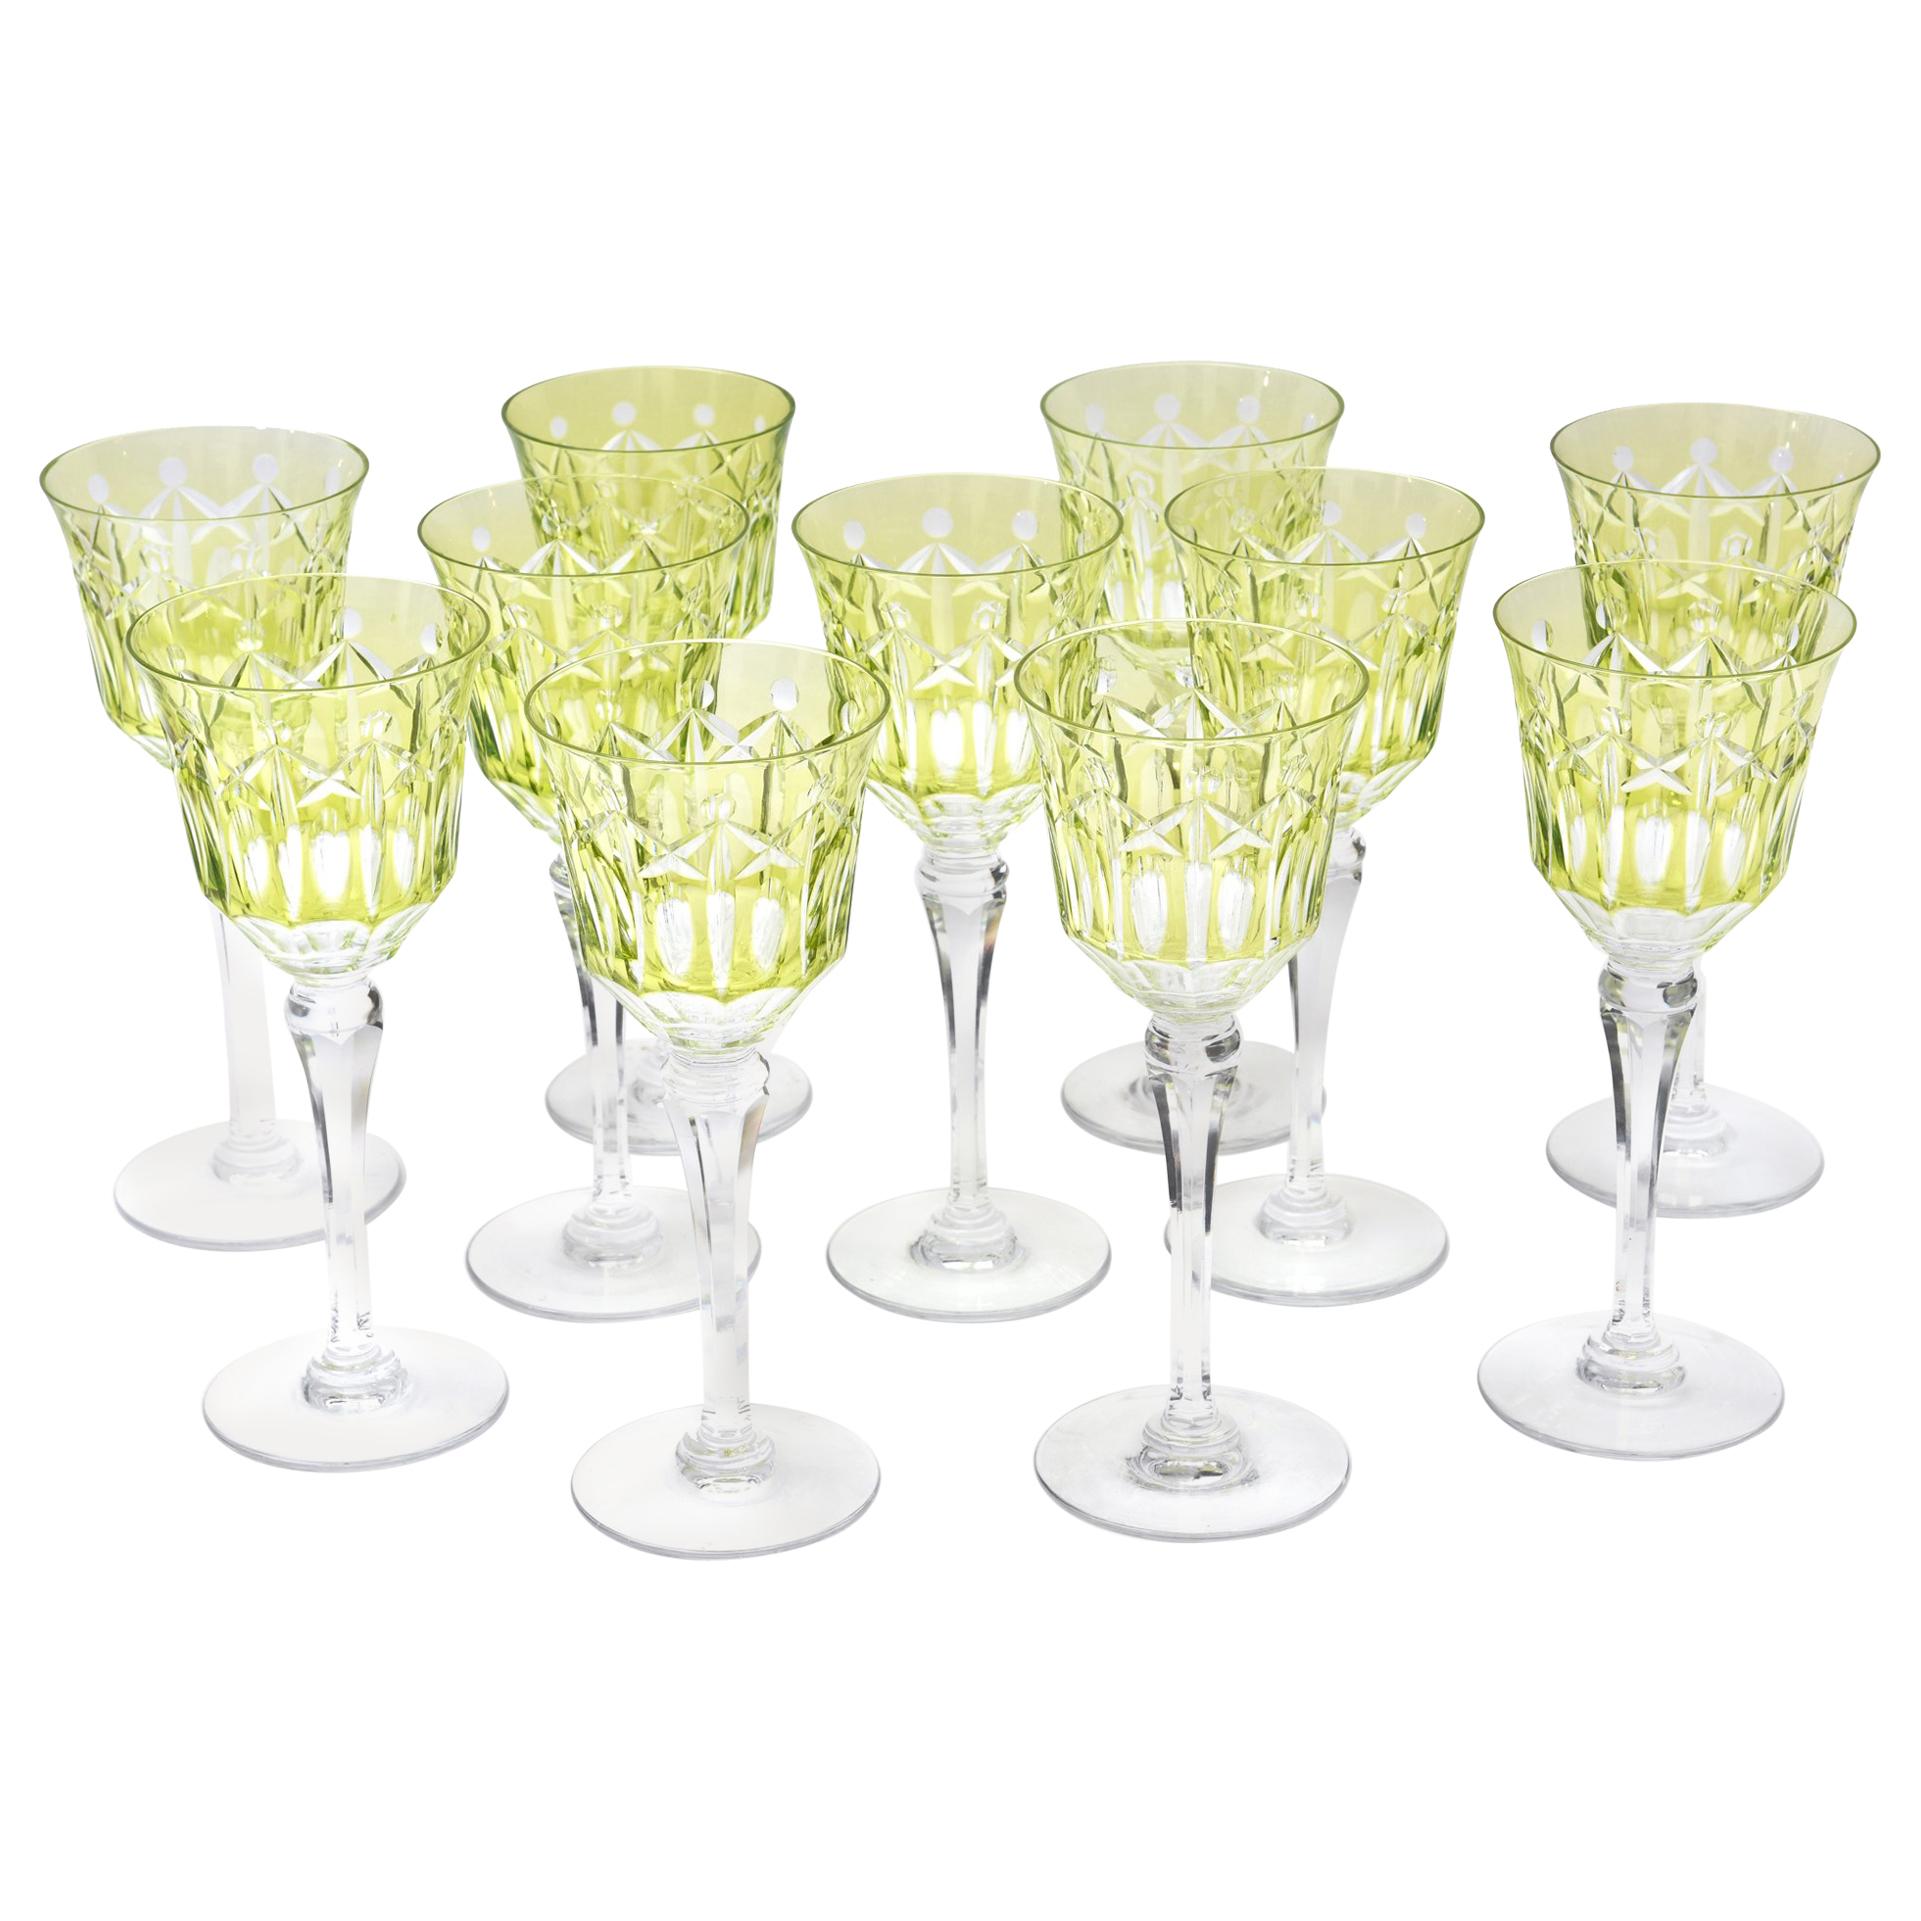 Set of 11 Crystal Wine Glasses, Great Chartreuse Color, Vintage